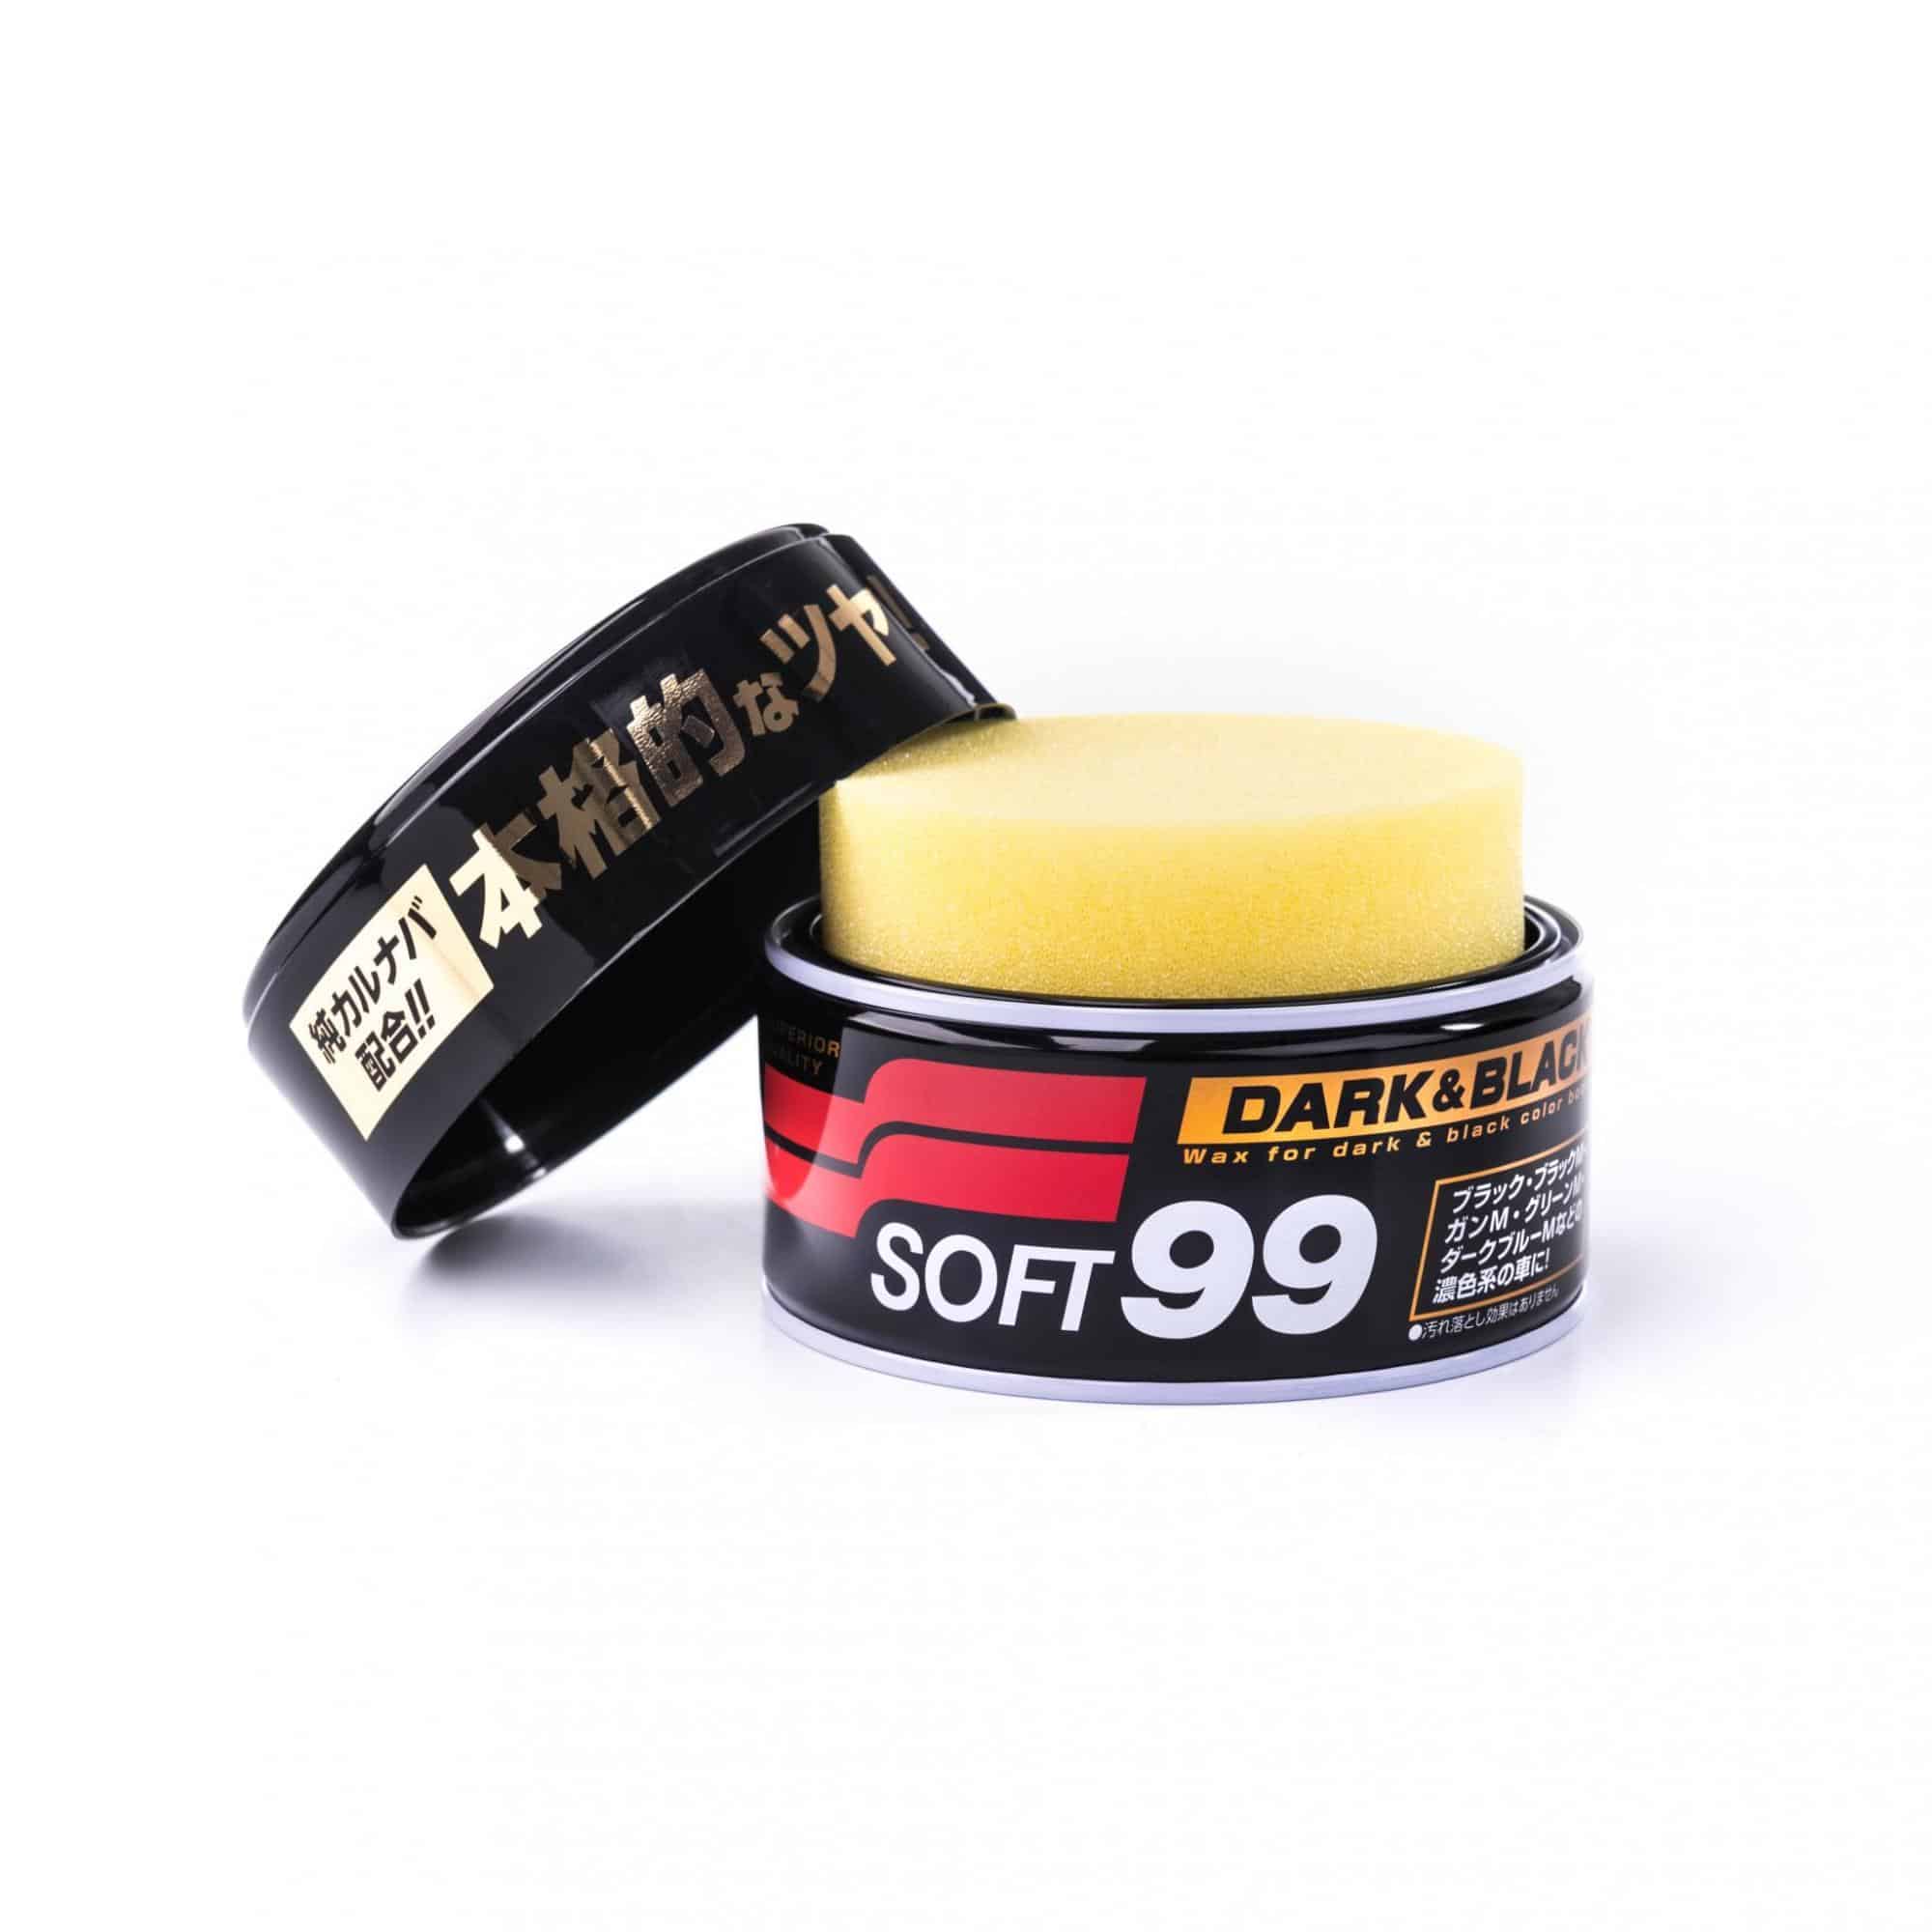 Soft99 Dark&Black Wax 2